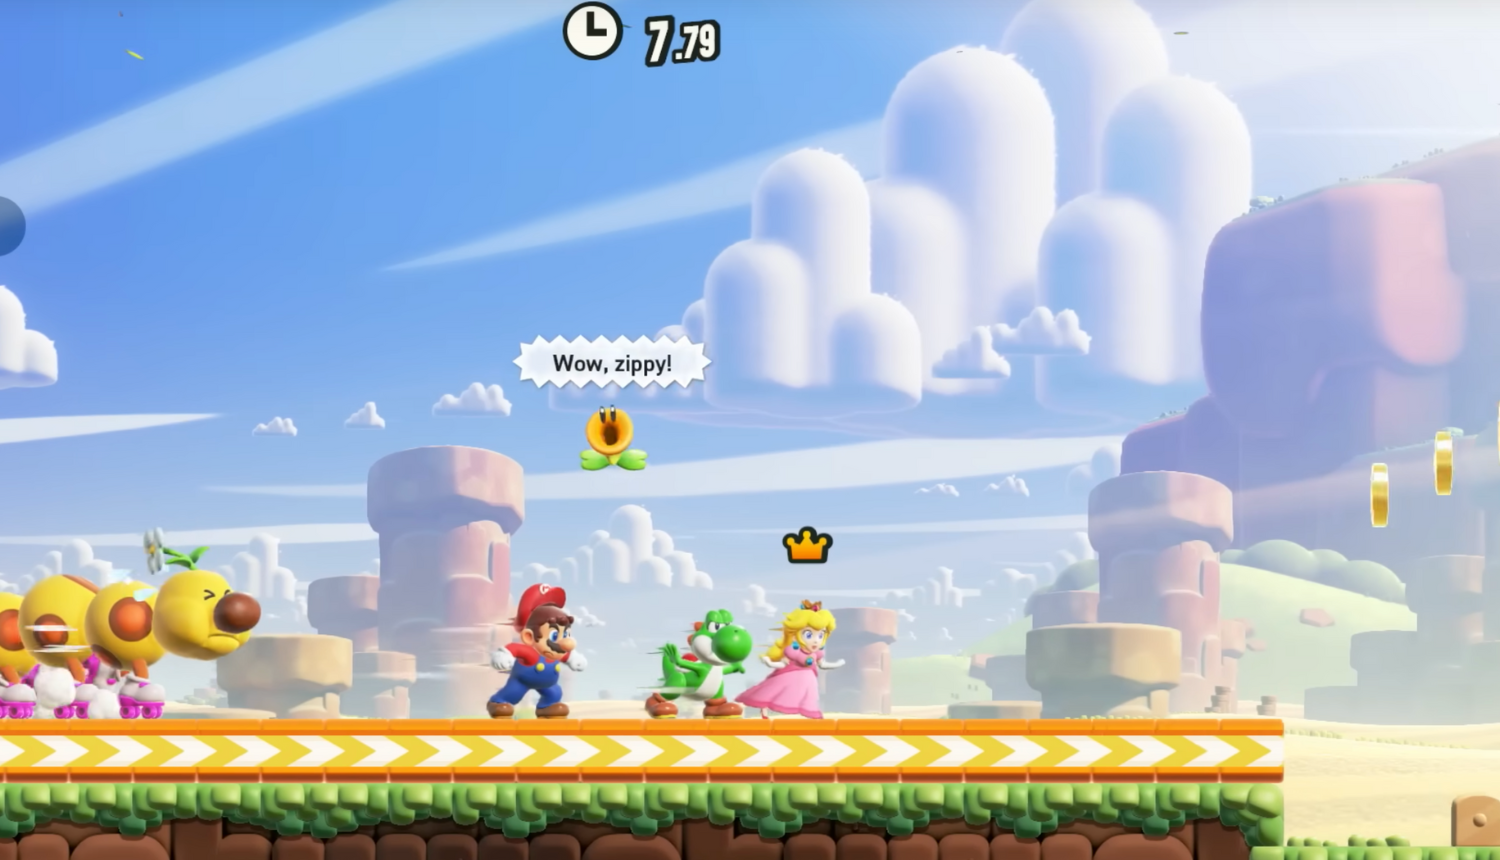 Super Mario Bros. Wonder review: Not Mush-room for improvement